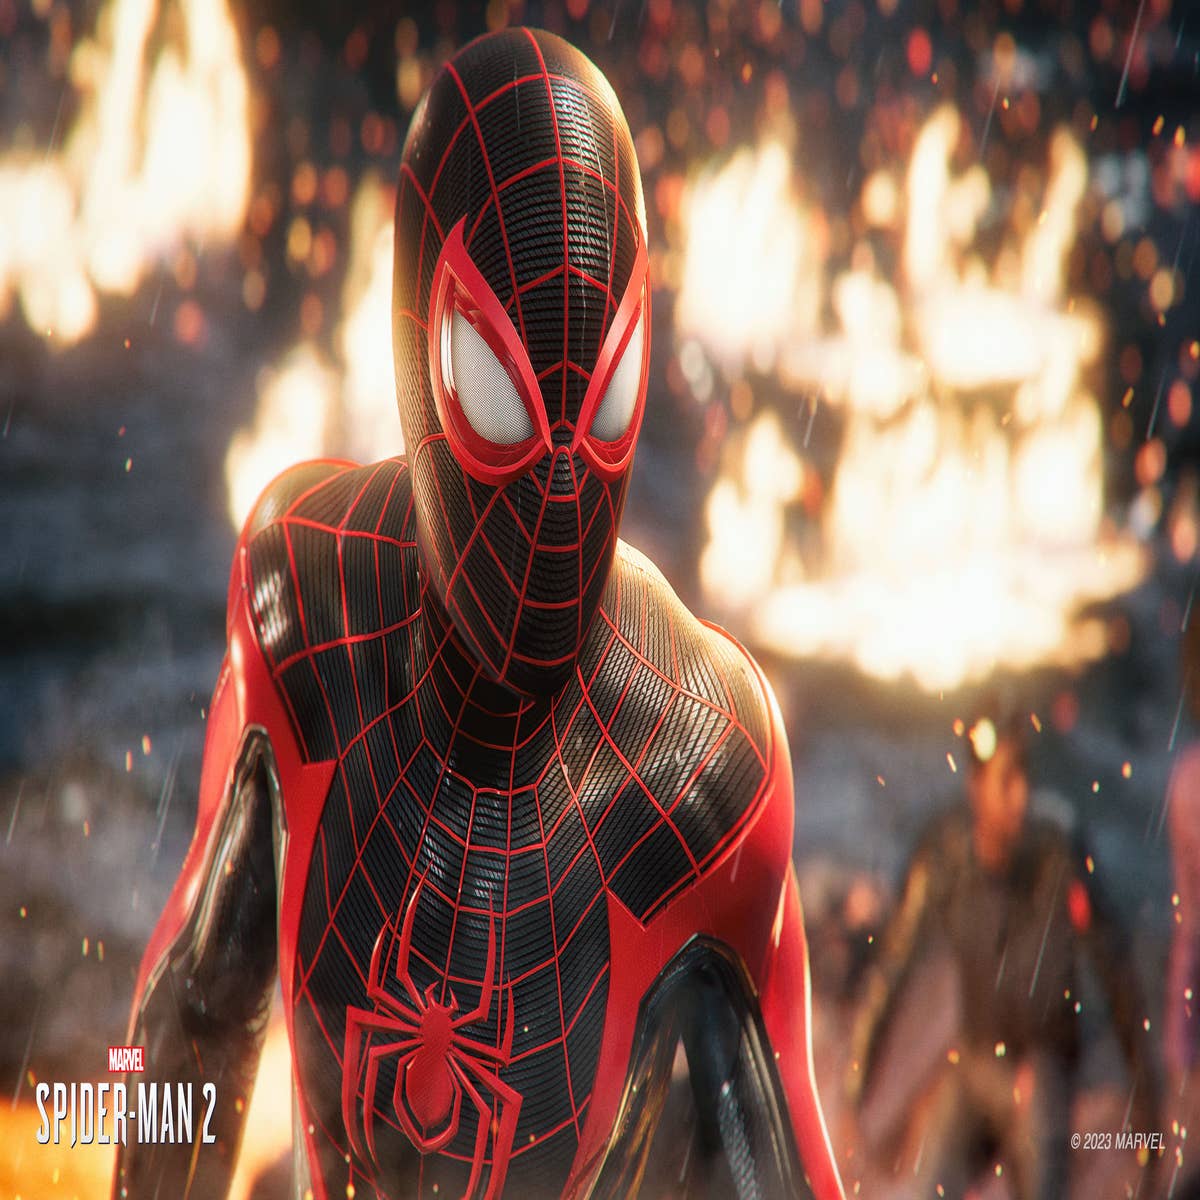 Marvel's Spider-Man 2 - Official Story Trailer